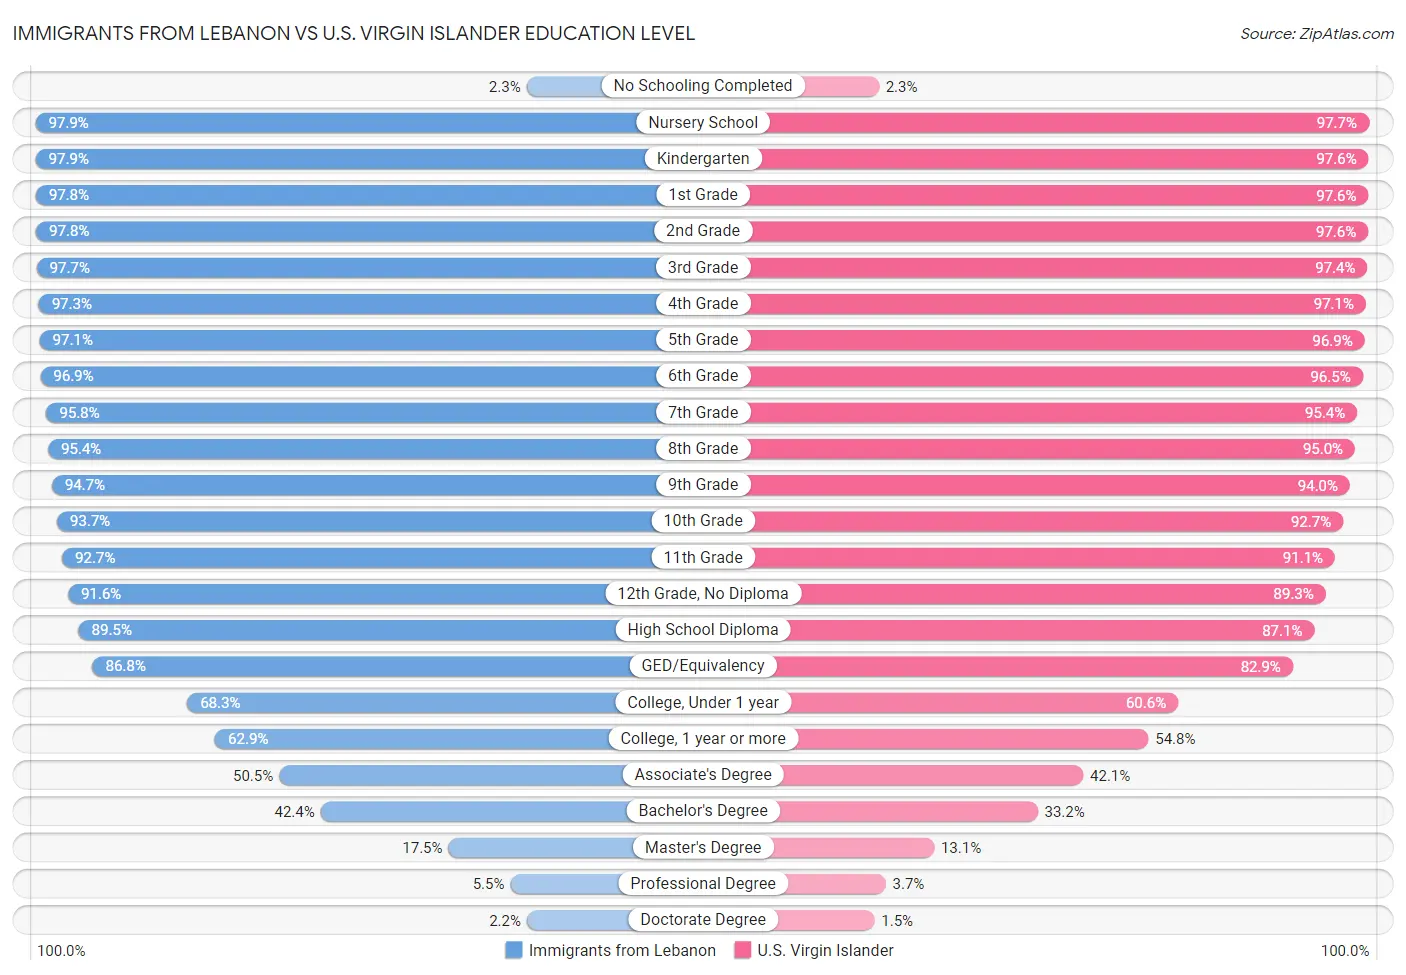 Immigrants from Lebanon vs U.S. Virgin Islander Education Level